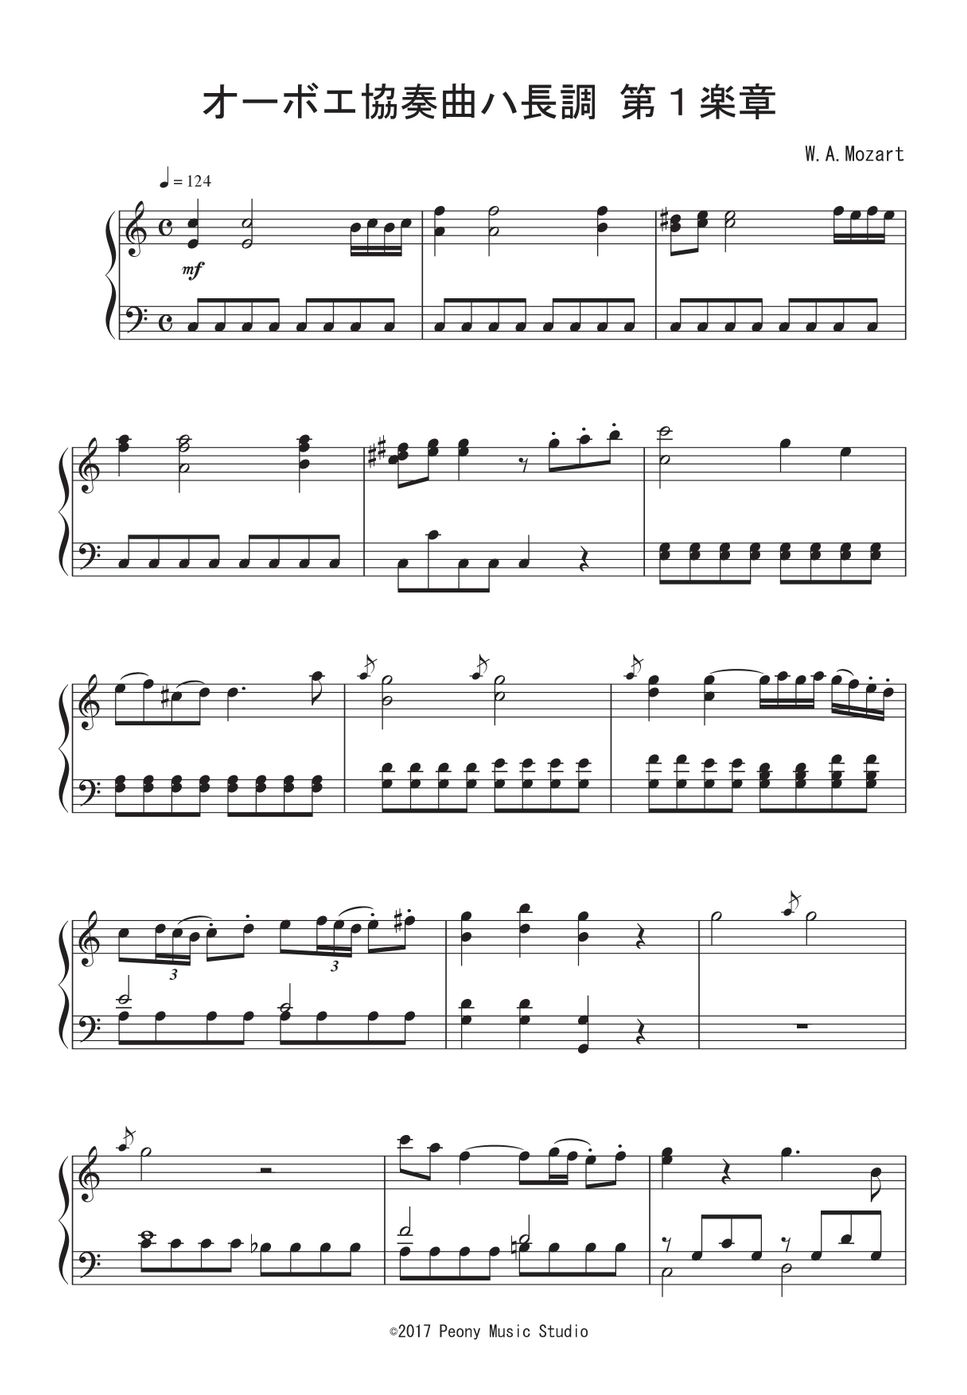 W.A.モーツァルト - 「オーボエ協奏曲 ハ長調」より 第1楽章 by Peony